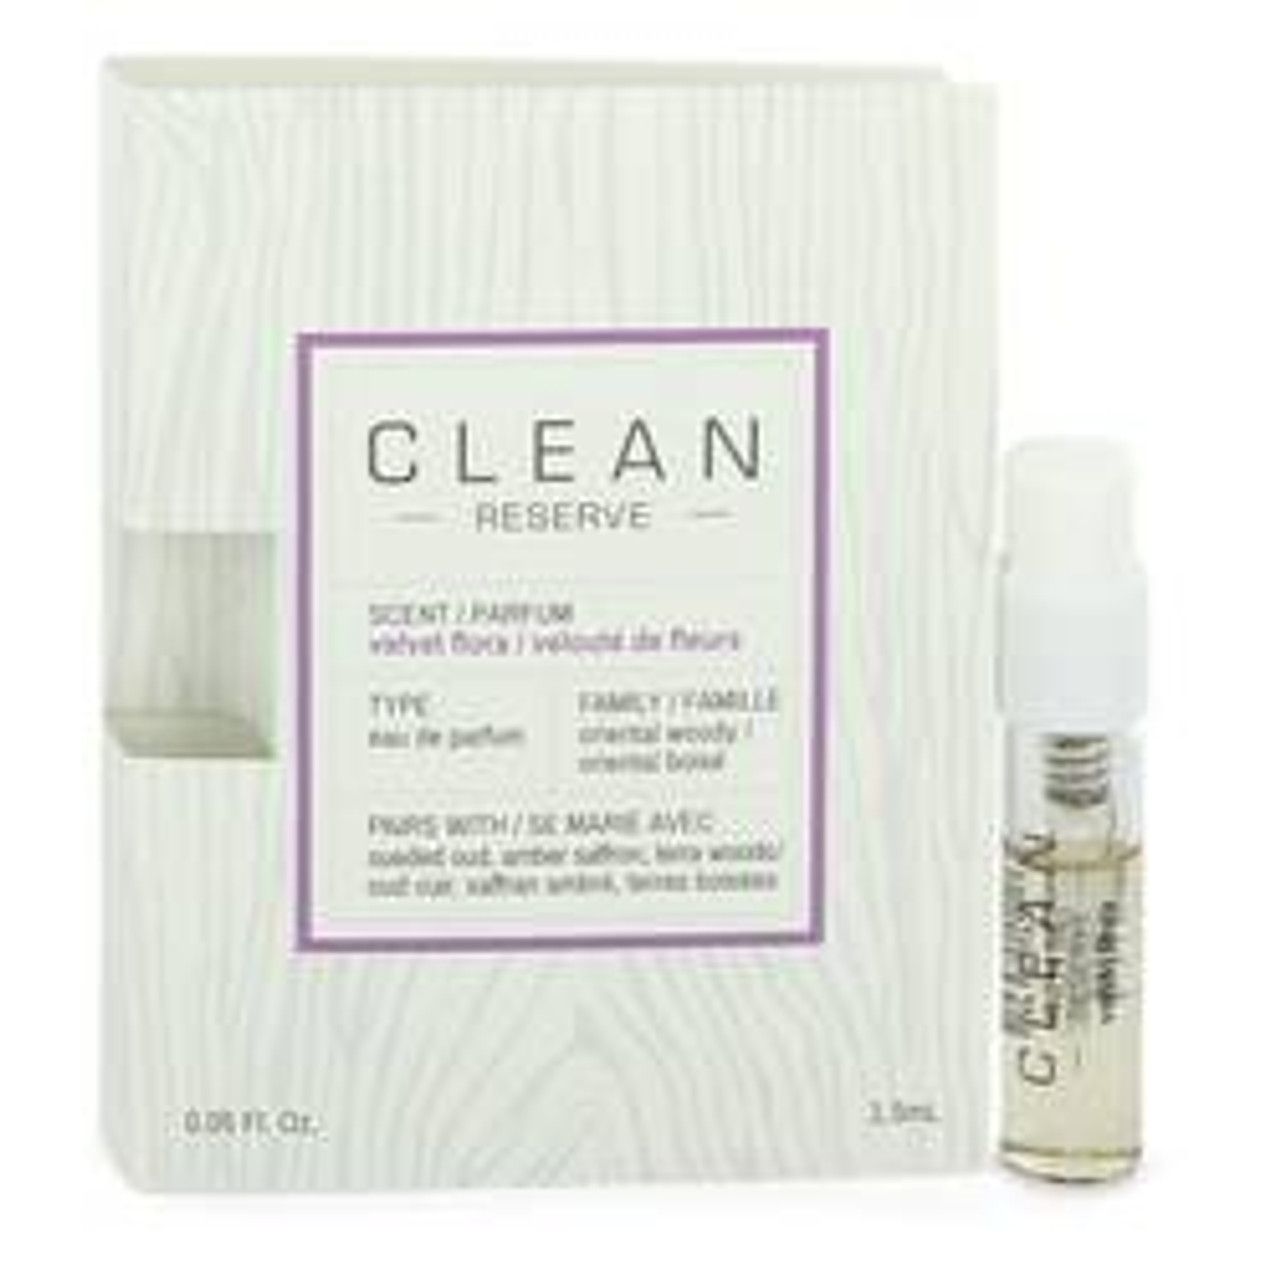 Clean Reserve Velvet Flora Perfume By Clean Vial (sample) 0.05 oz for Women - *Pre-Order